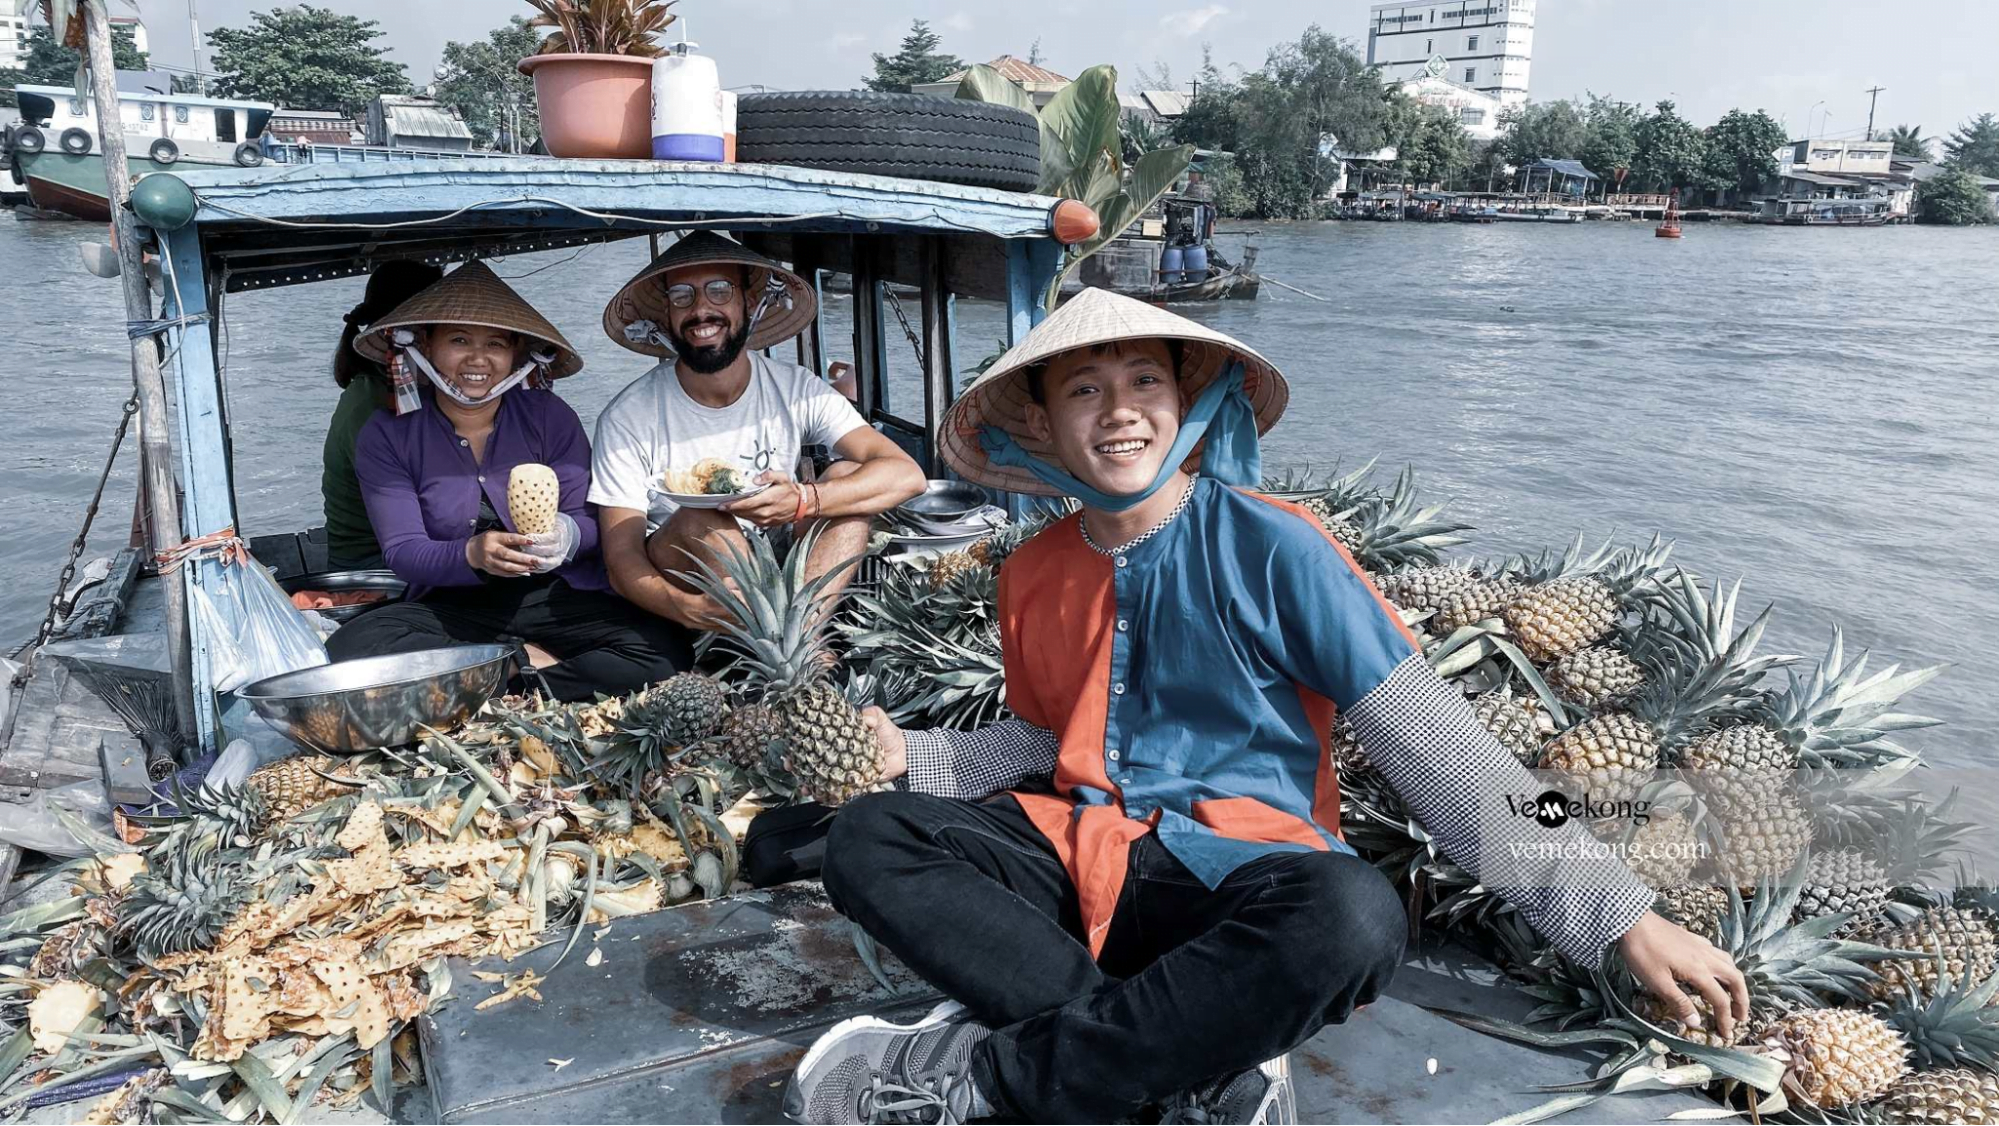 Visitors eat fruit in Cai Rang floating market